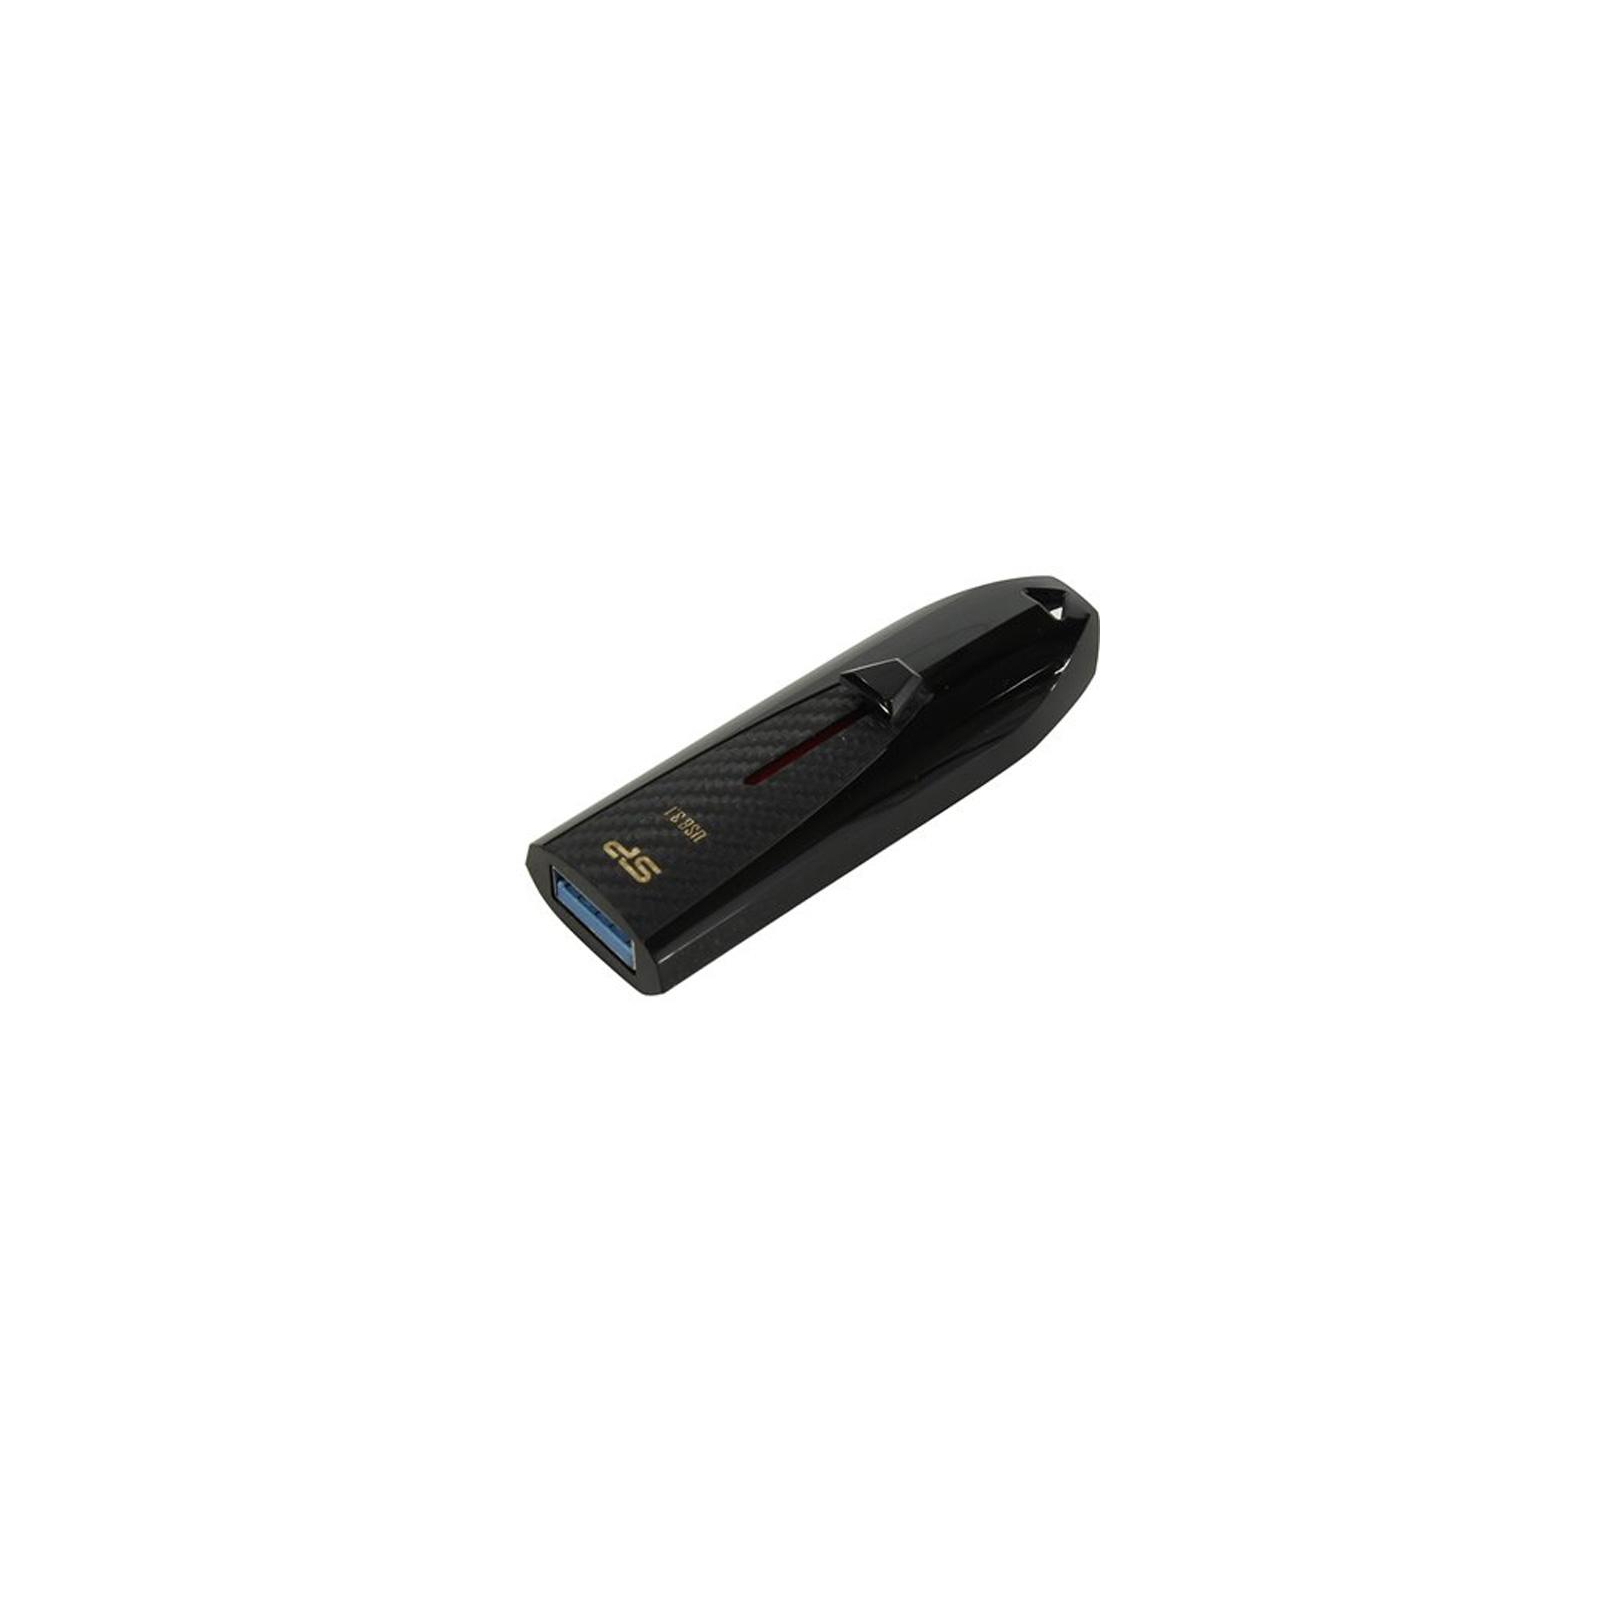 USB флеш накопитель Silicon Power 128GB B25 Black USB 3.0 (SP128GBUF3B25V1K) изображение 2